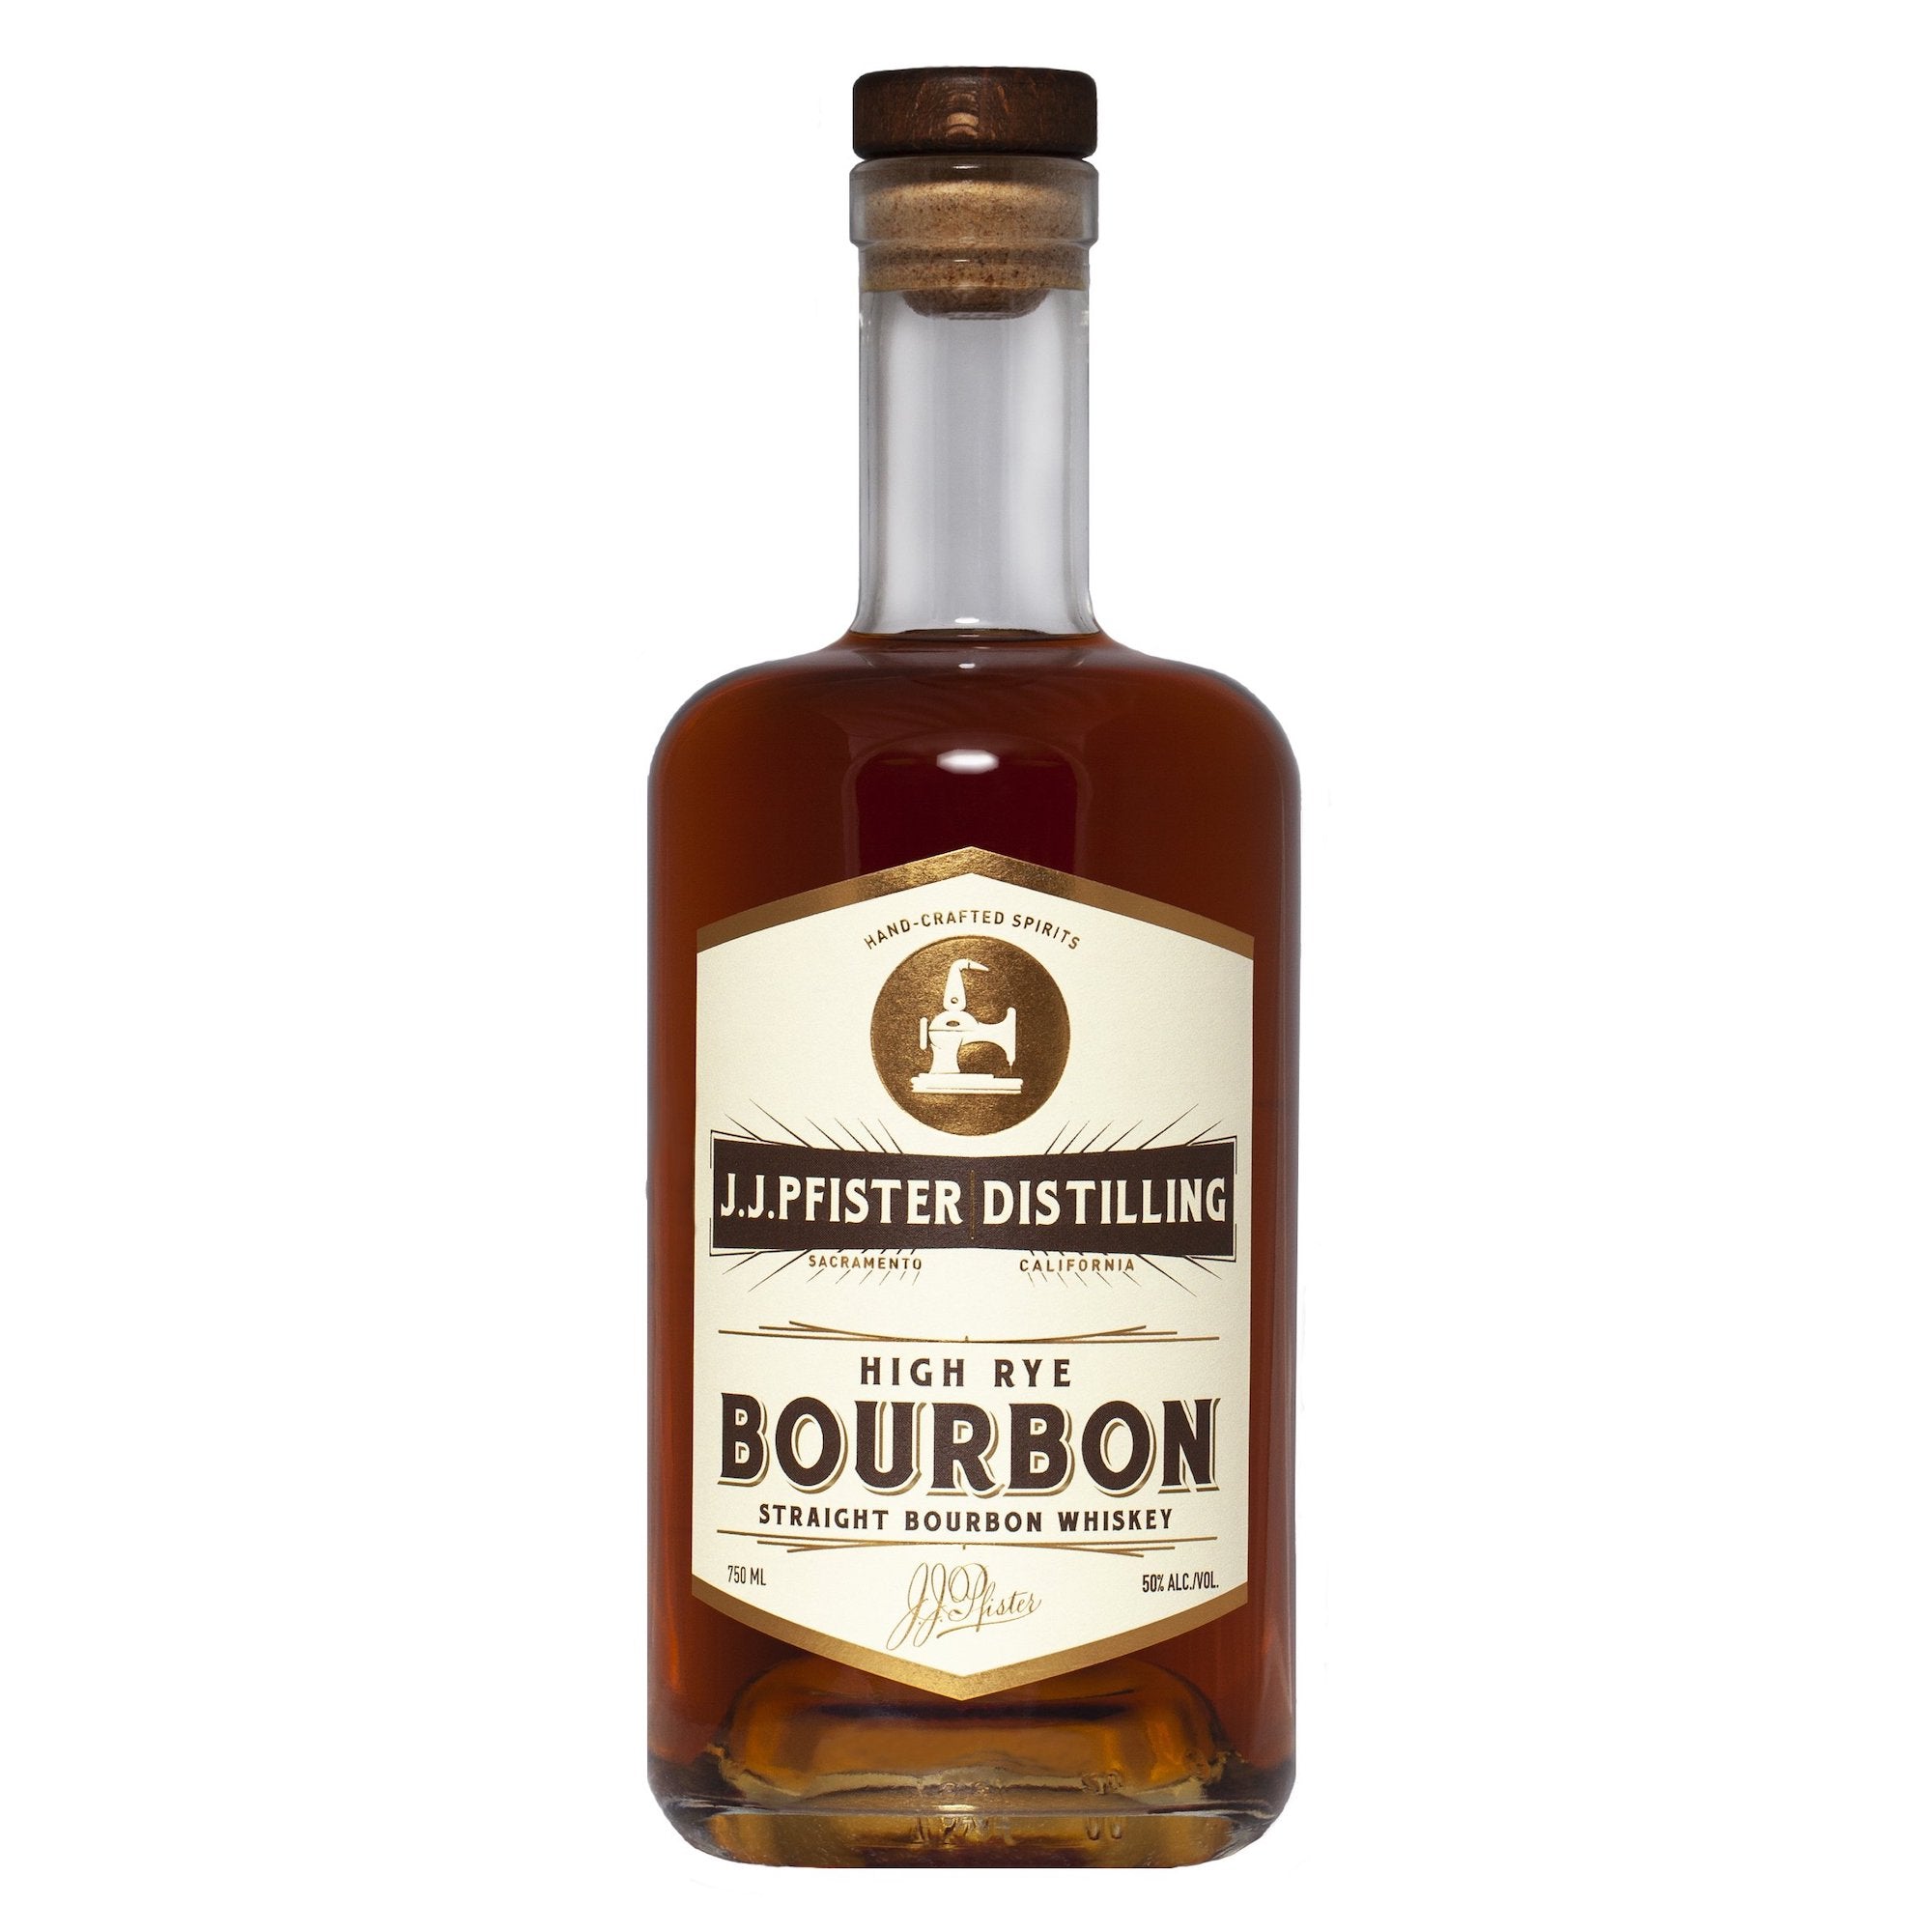 J.J. Pfister Distilling High Rye Bourbon